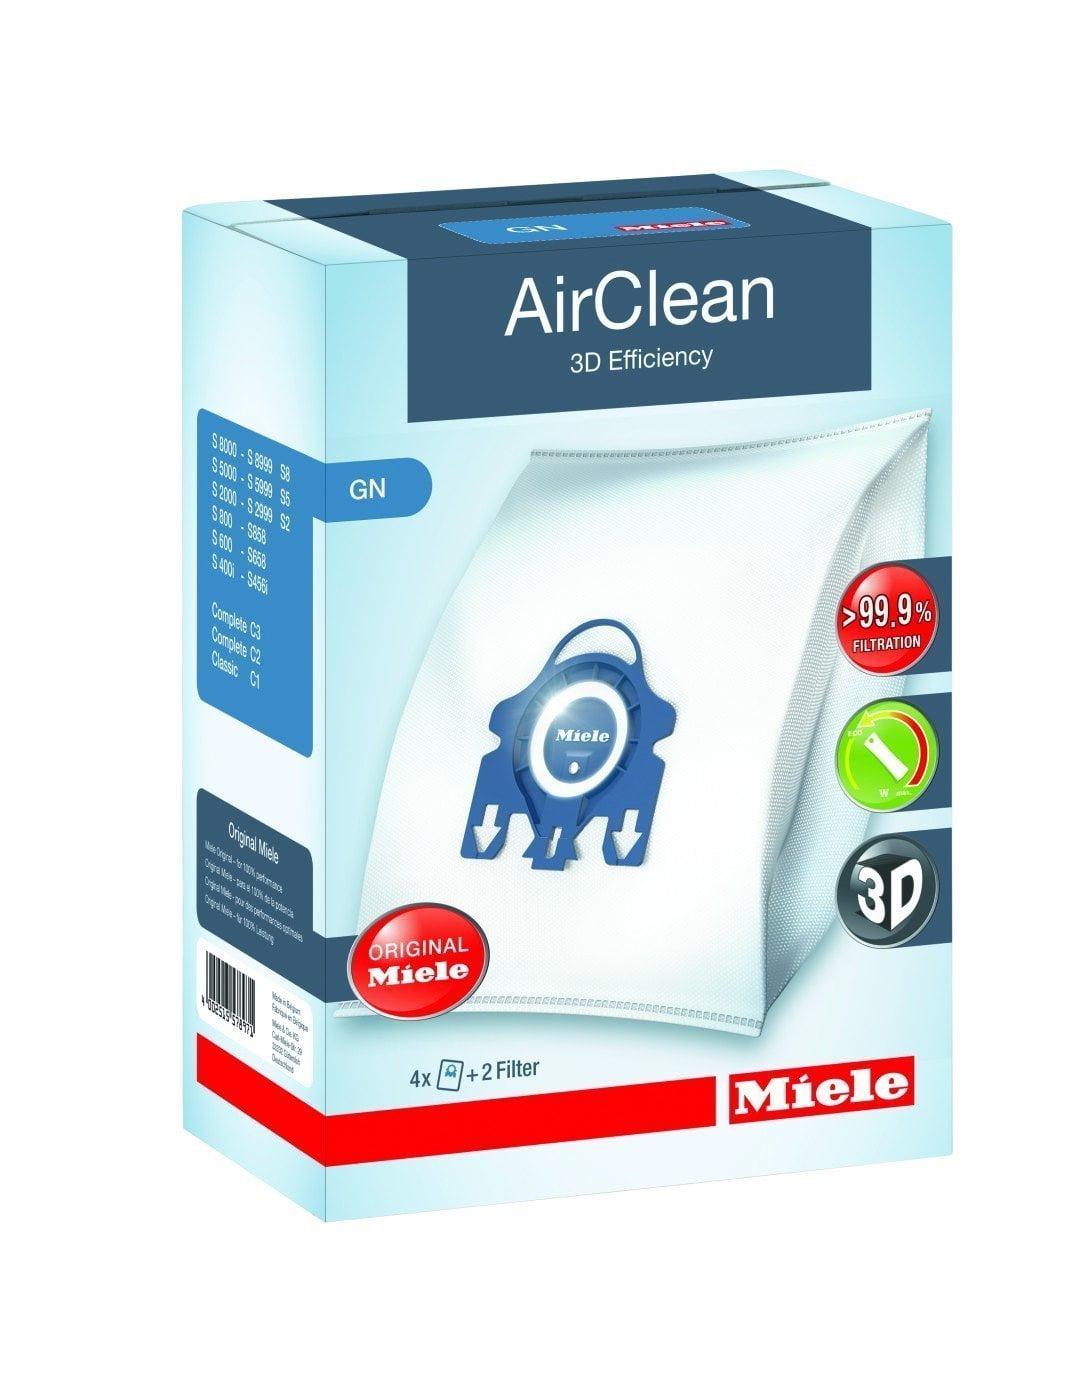 Miele 10123210 AirClean 3D Efficiency Dust Bag, Type GN, 4 Bags & 2 Filters  - Walmart.com